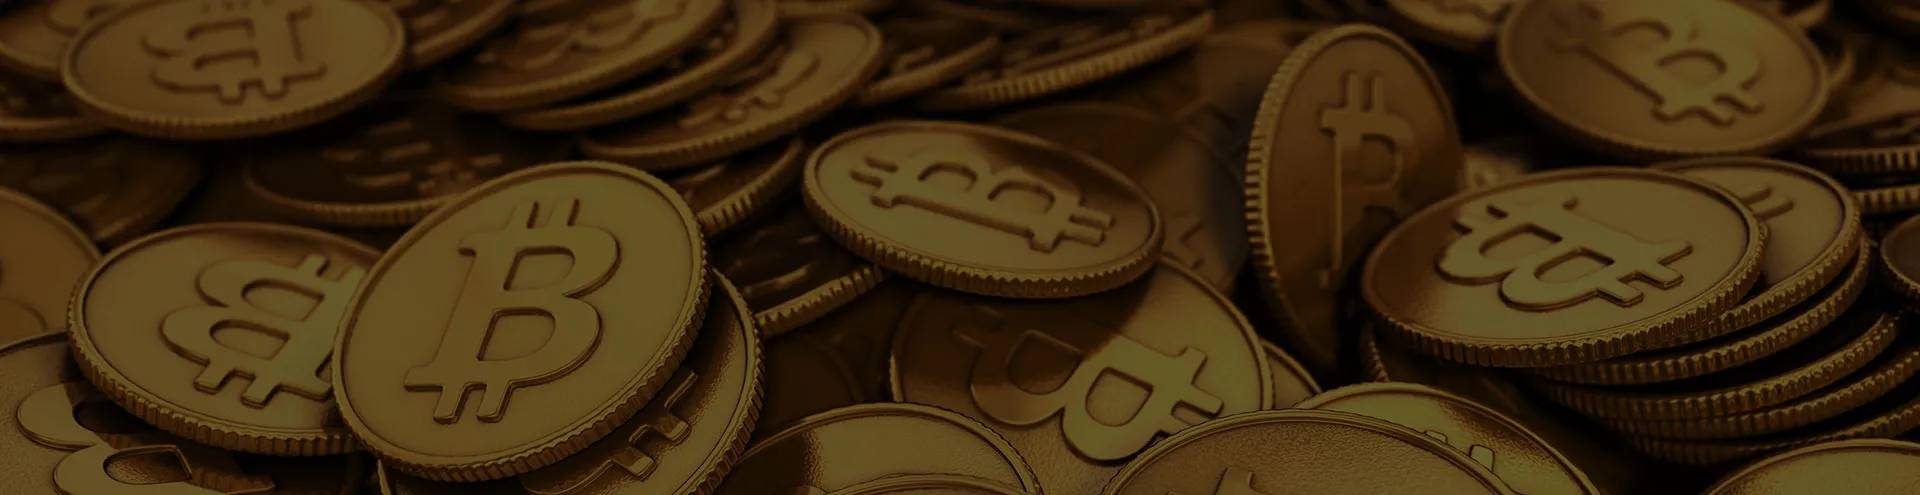 Bitcoin Code - Jaka jest różnica między Bitcoinem a Bitcoin Cash?